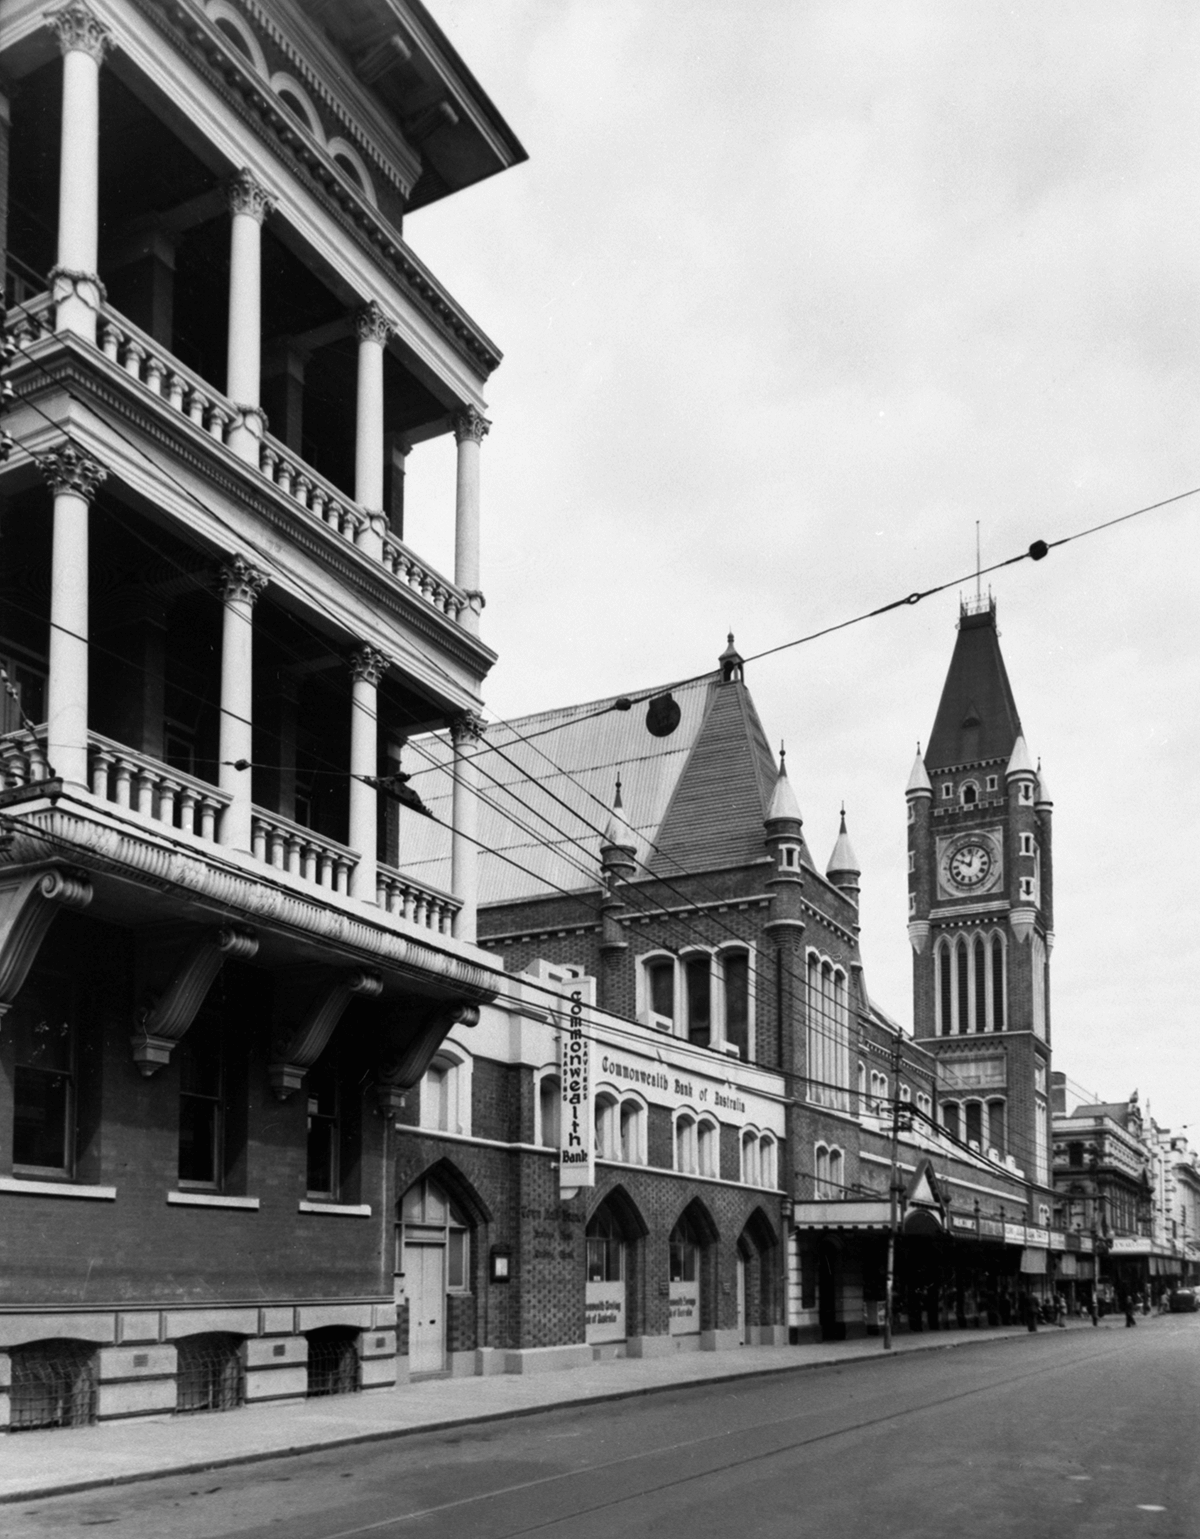 Perth Town Hall. Photo courtesy of Perth History Centre